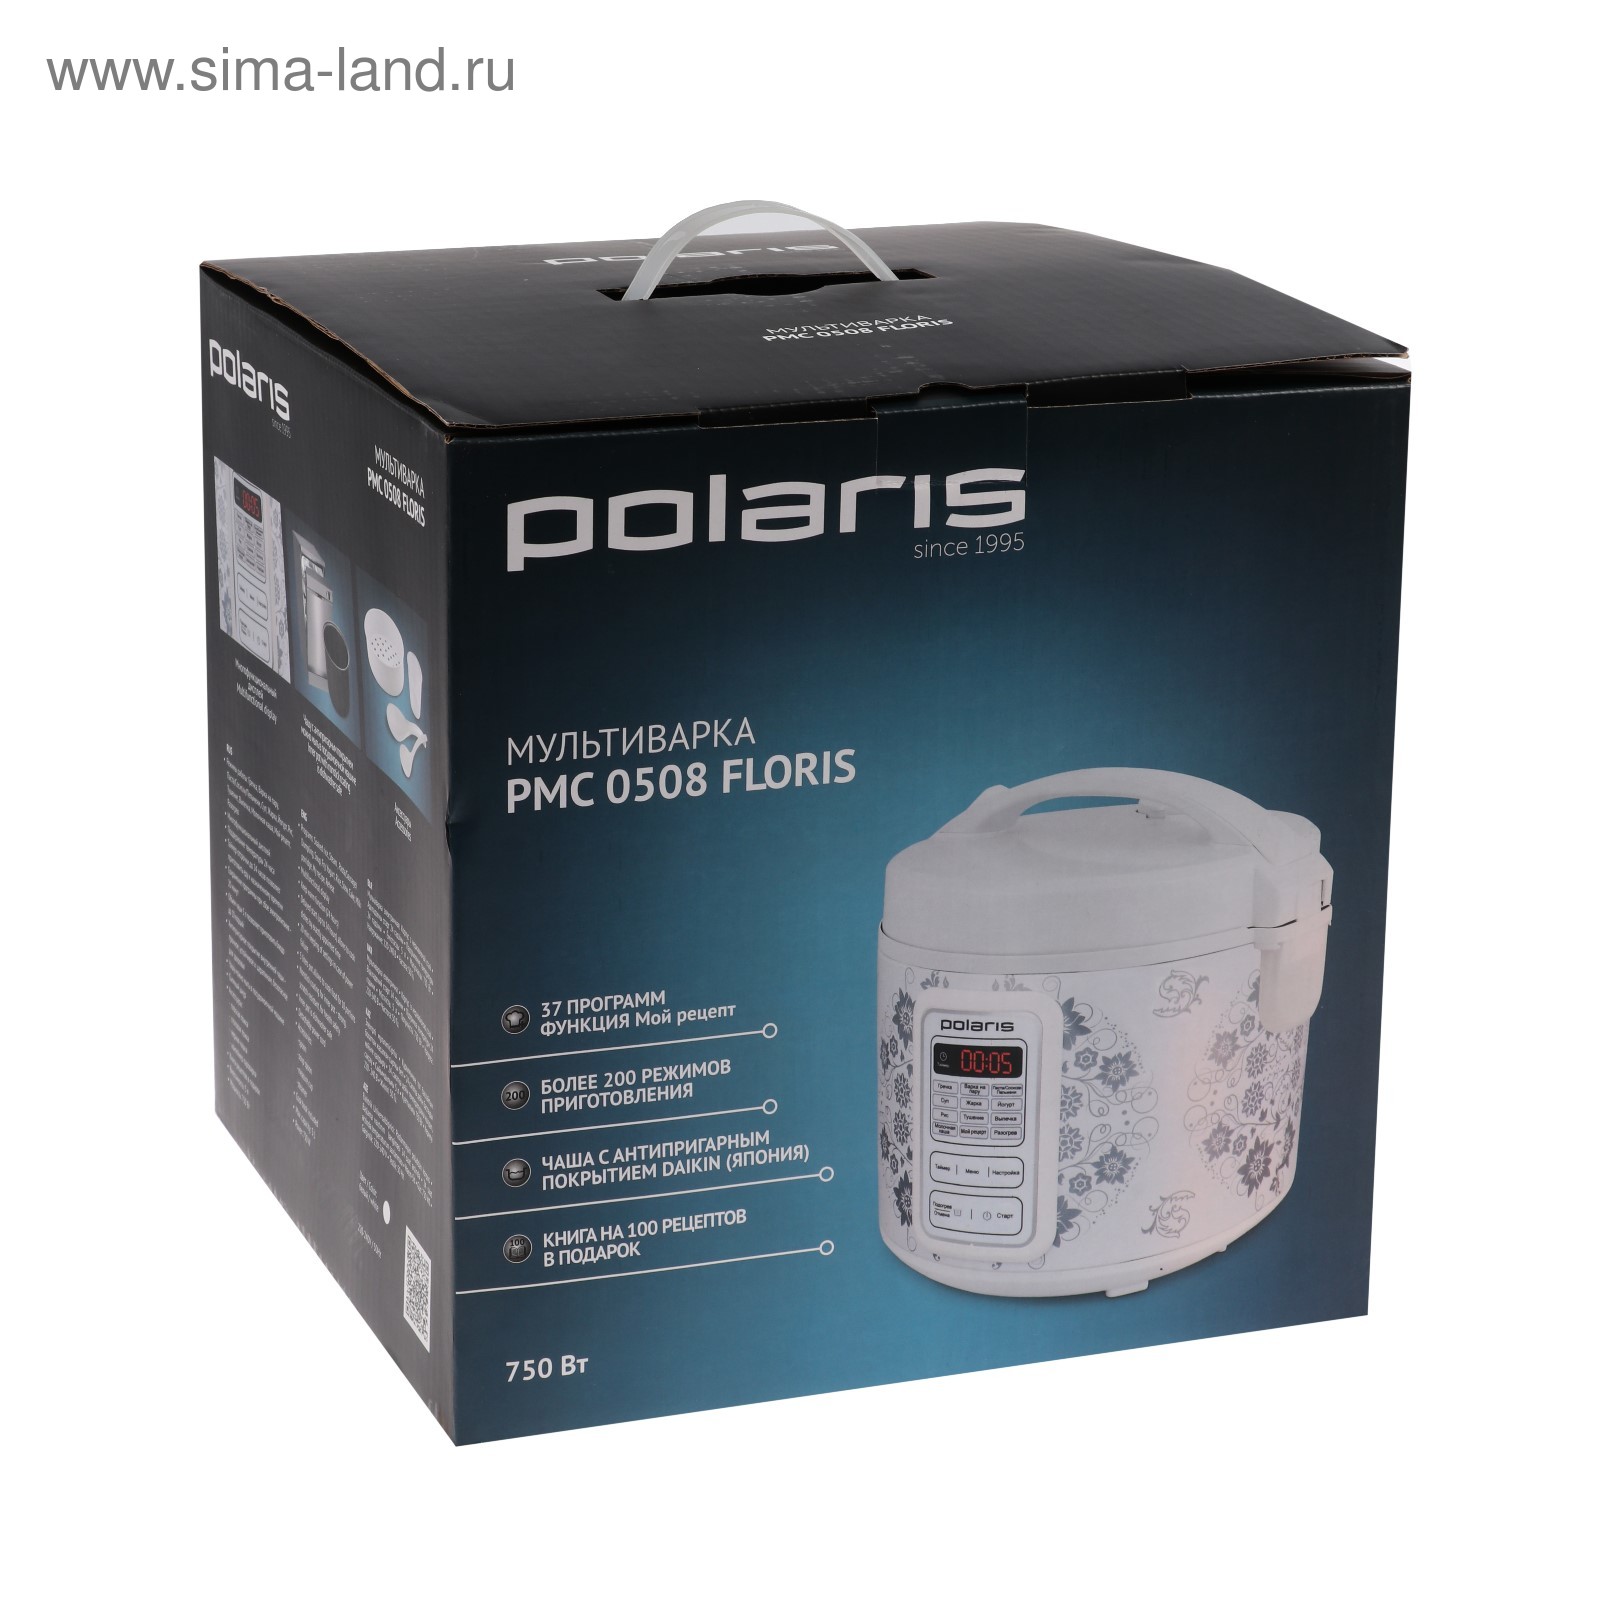 Polaris производитель. Polaris PMC 0508d Floris. Мультиварка PMC 0508d. Мультиварка Поларис Floris 0508d. Мультиварки Поларис PMC 0508d Floris.